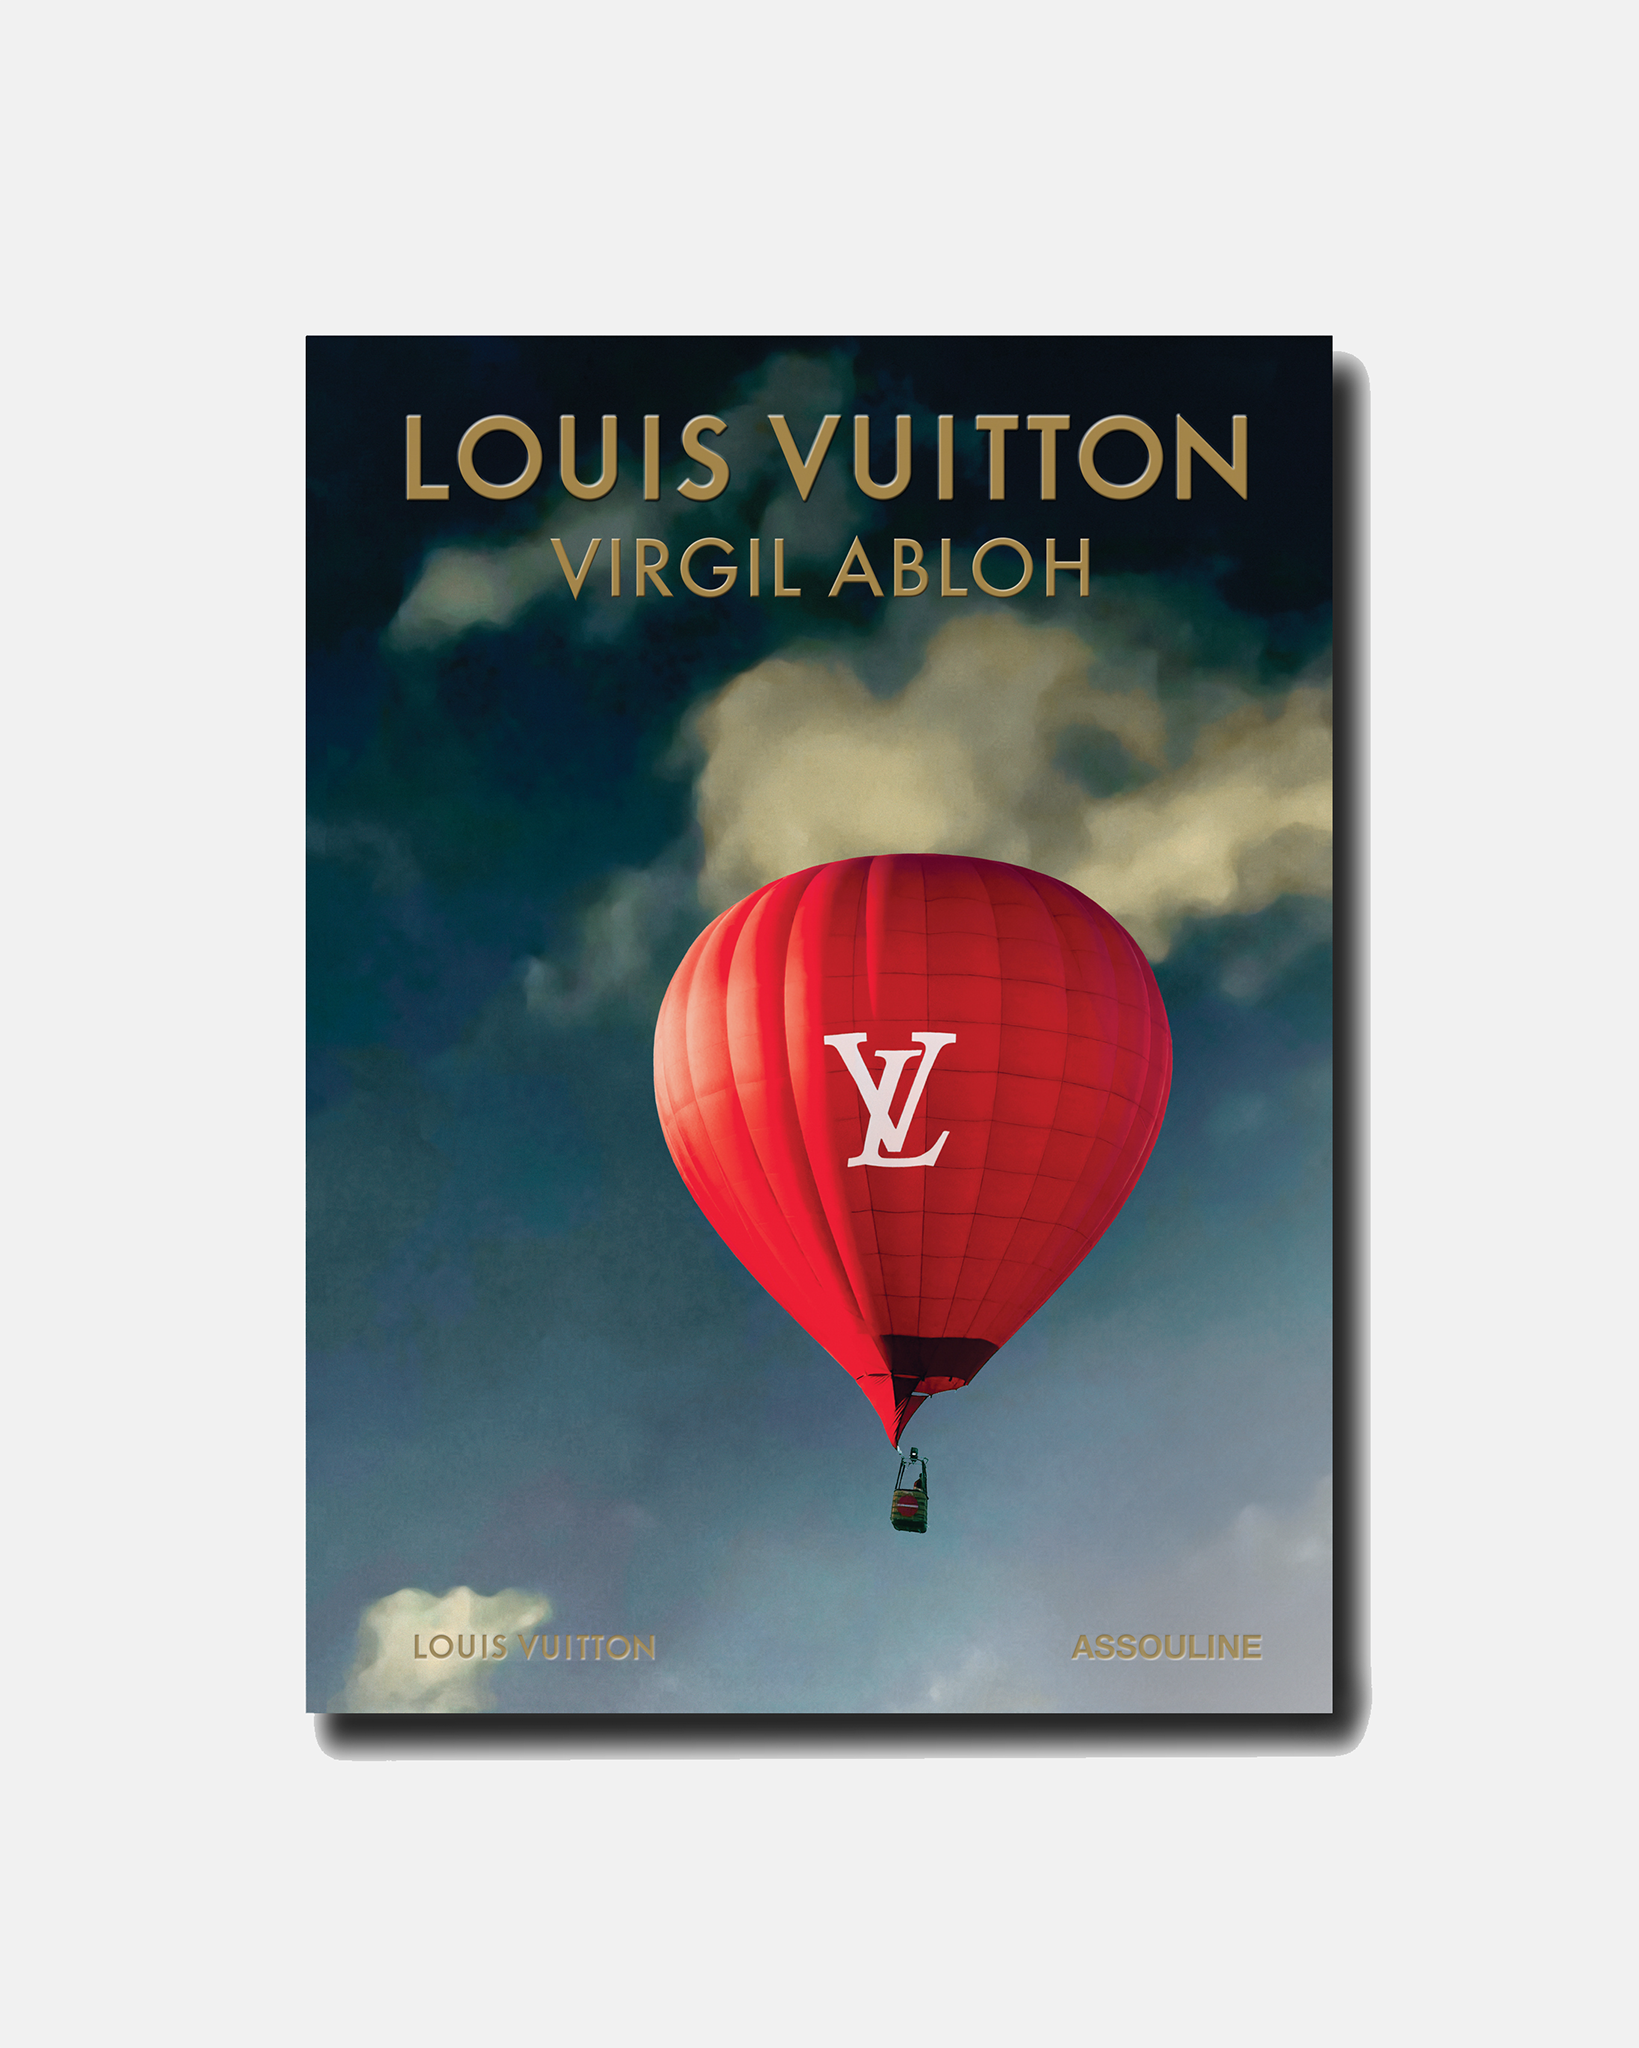 LOUIS VUITTON: VIRGIL ABLOH (CLASSIC BALLOON COVER)